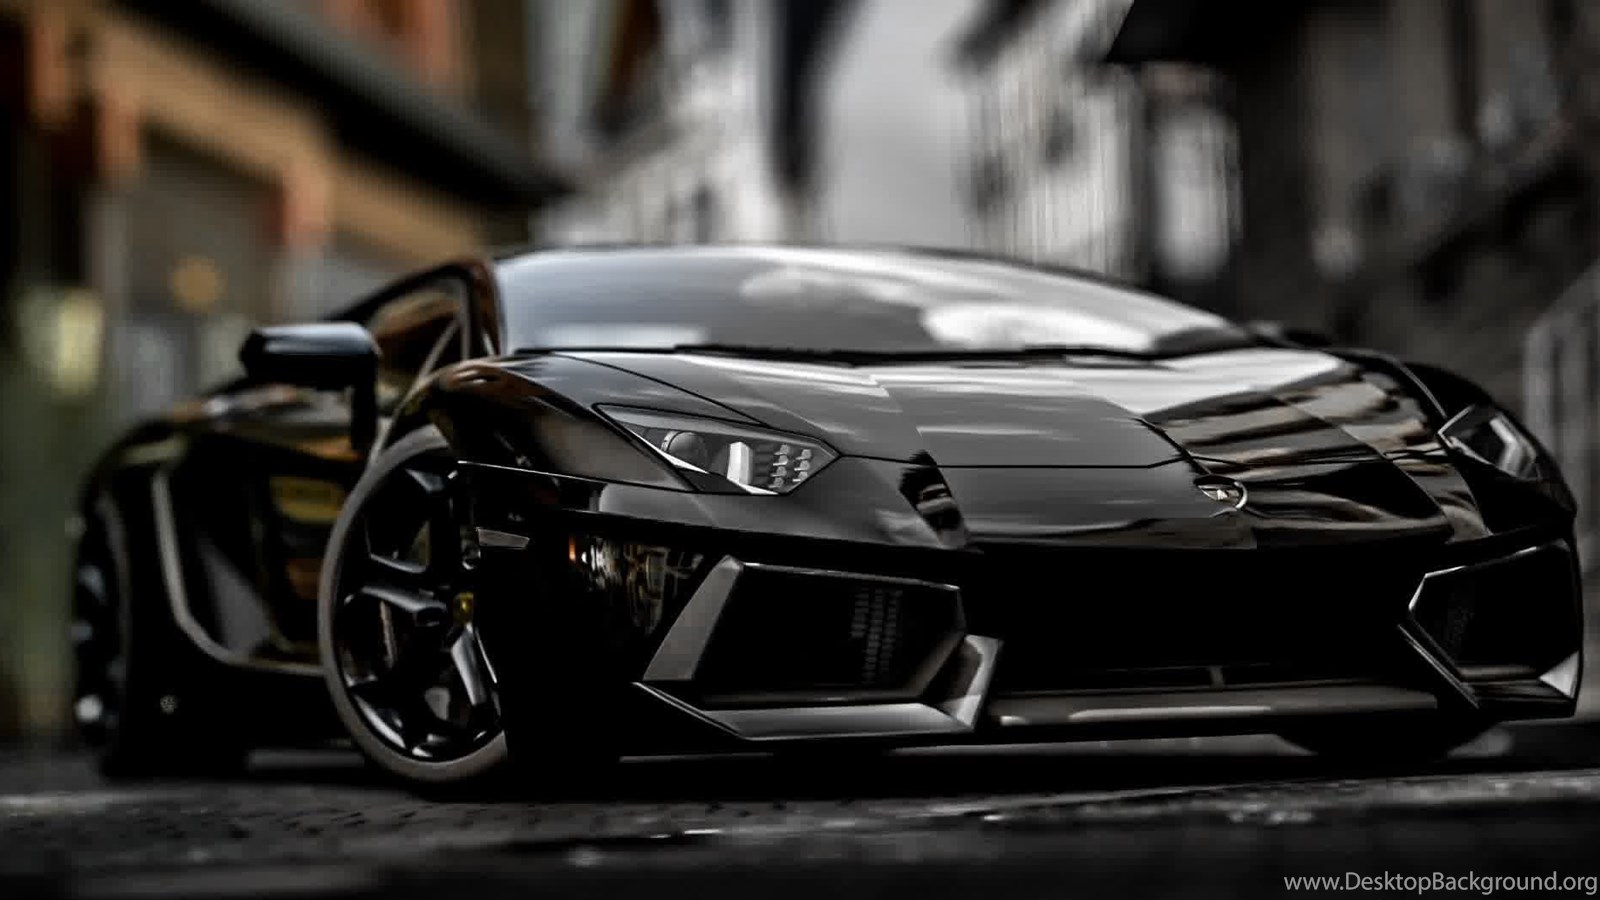 Picture Lamborghini Aventador Matte Black Wallpaper Cars. Desktop Background